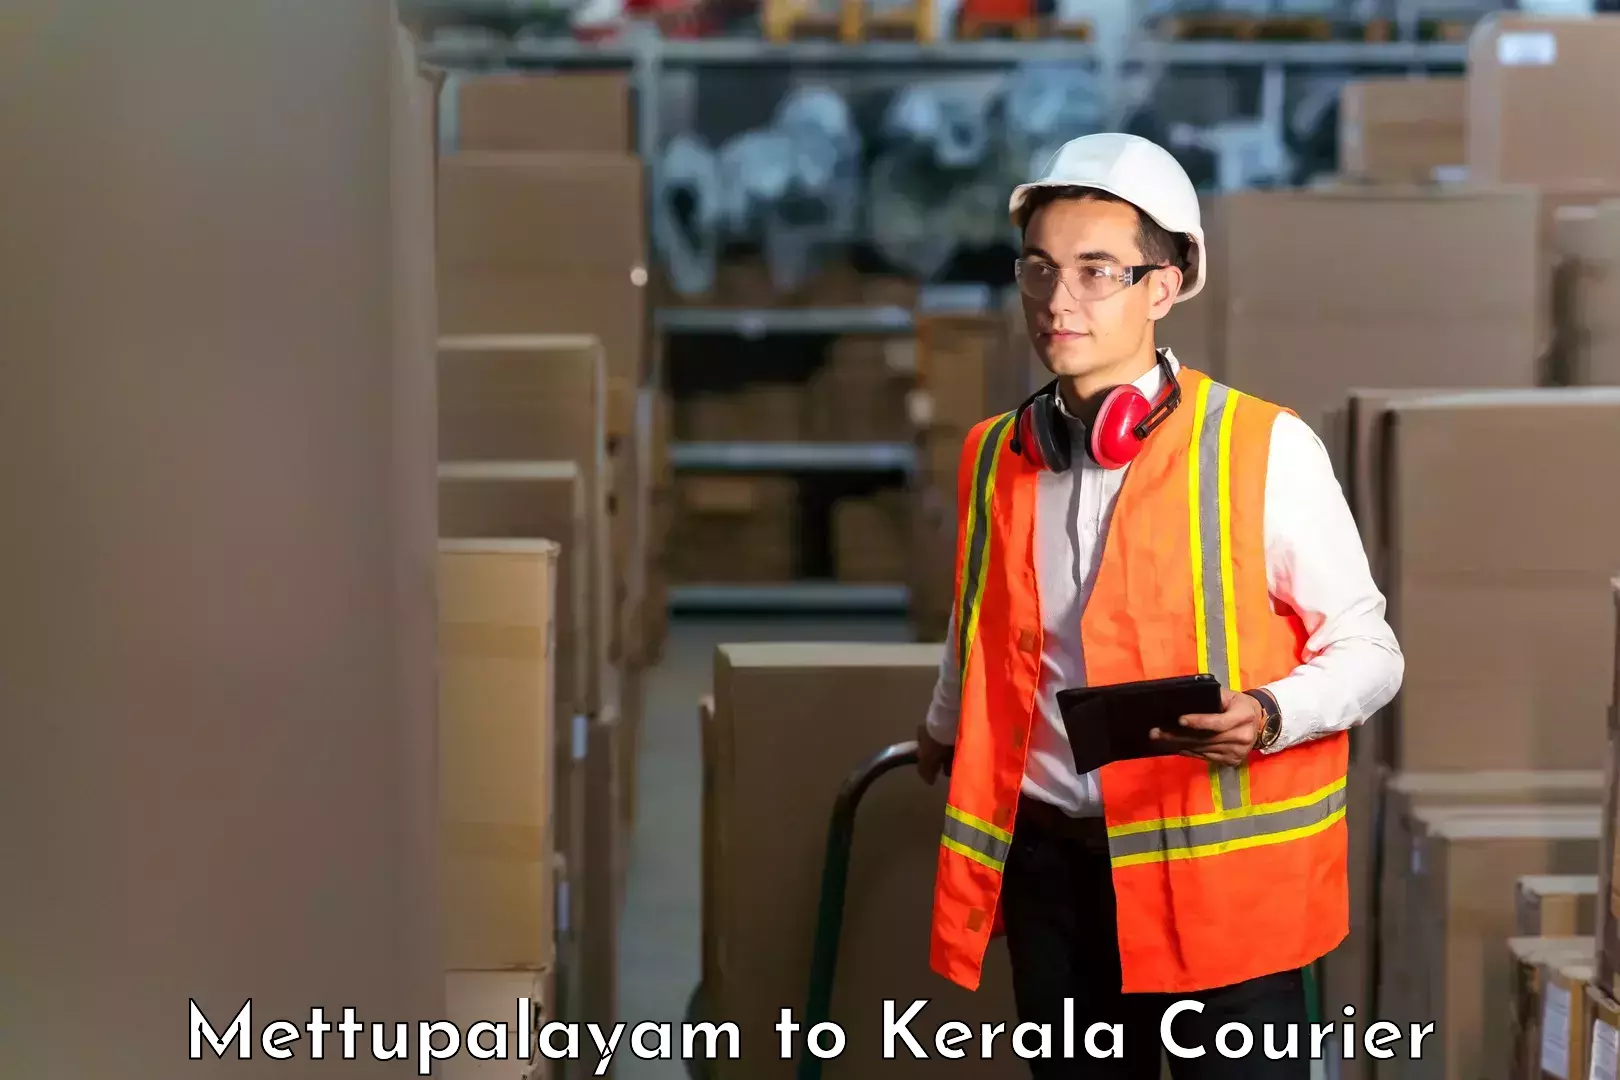 User-friendly delivery service Mettupalayam to Tiruvalla